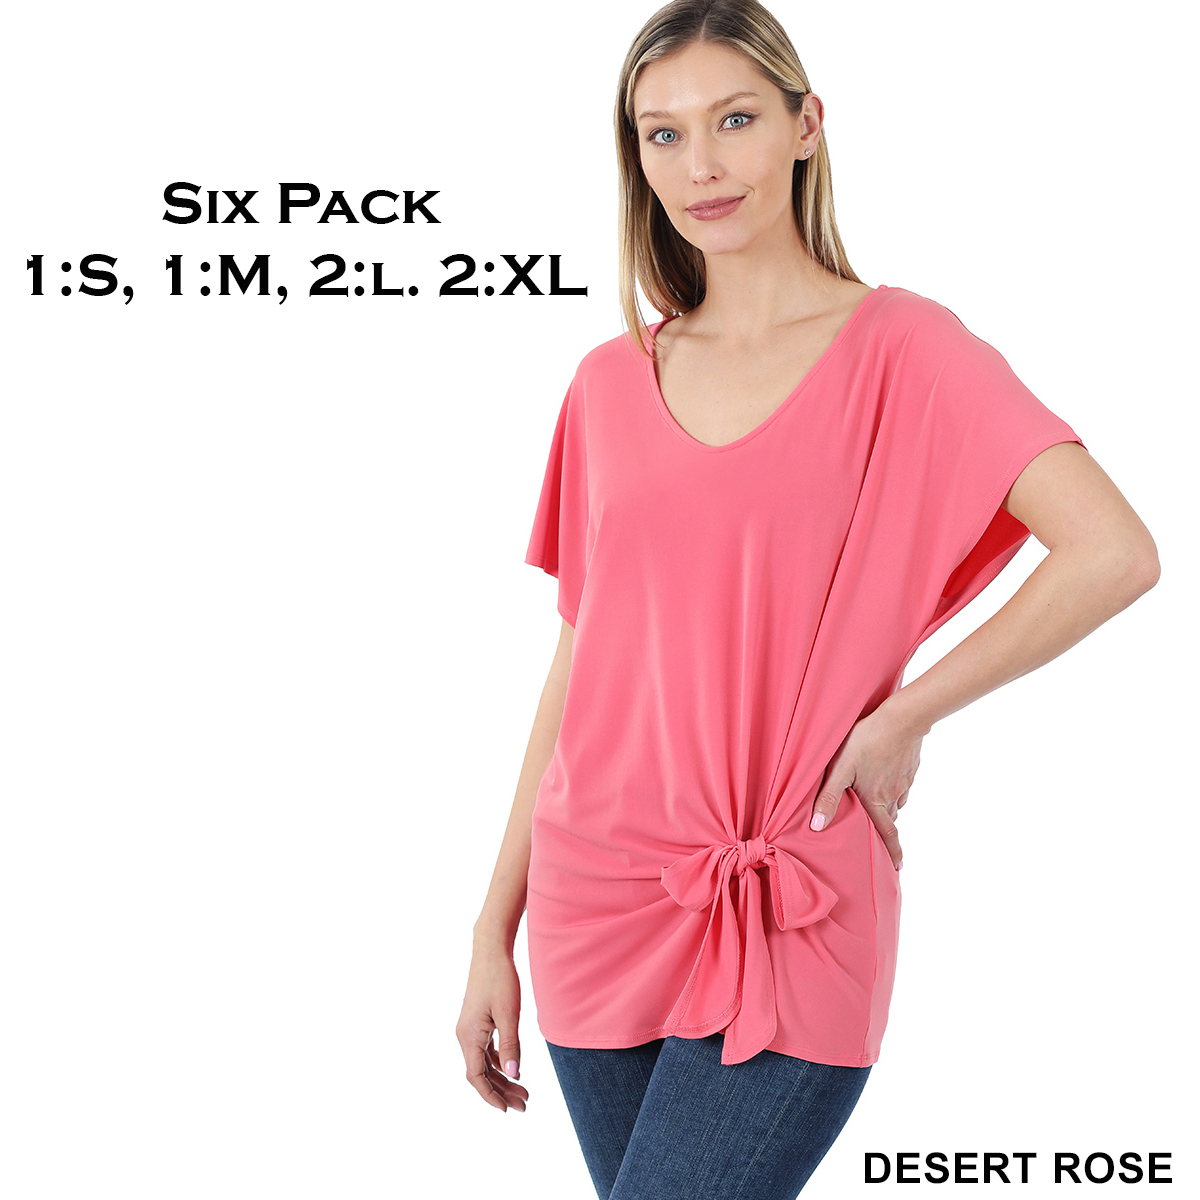 3168 Desert Rose<br>
Tie Front Top<BR>
SIX PACK